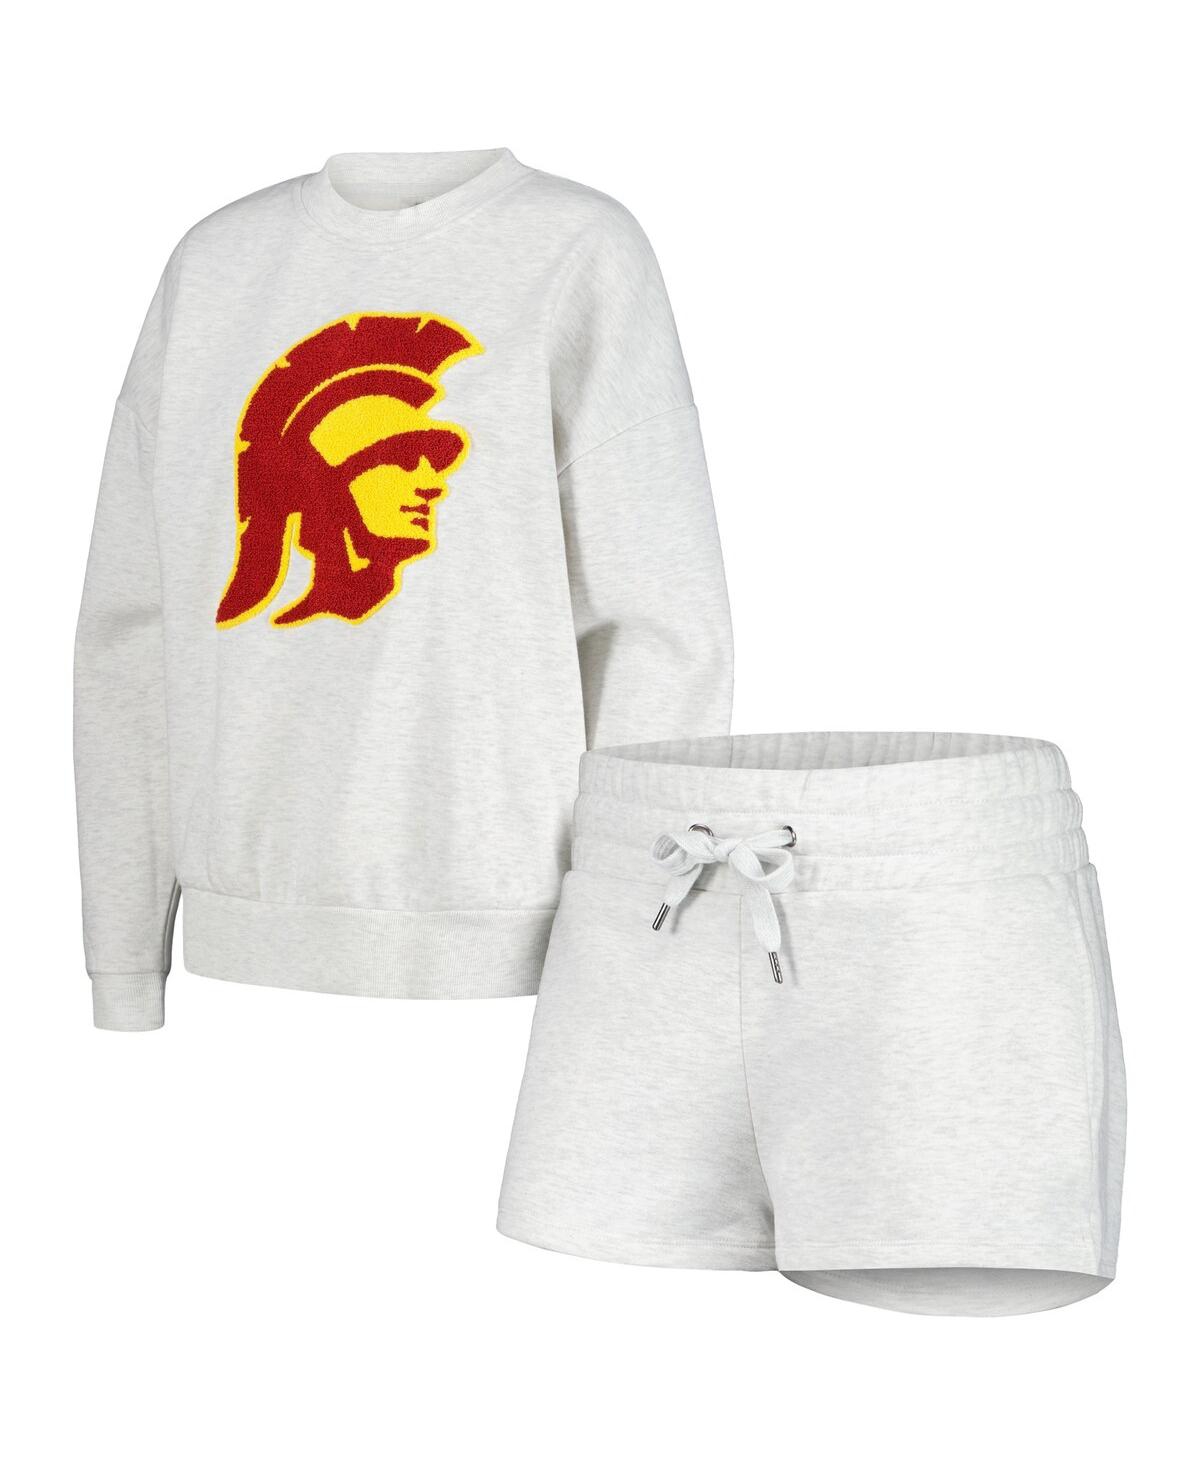 Shop Gameday Couture Women's  Ash Usc Trojans Team Effort Pullover Sweatshirt And Shorts Sleep Set